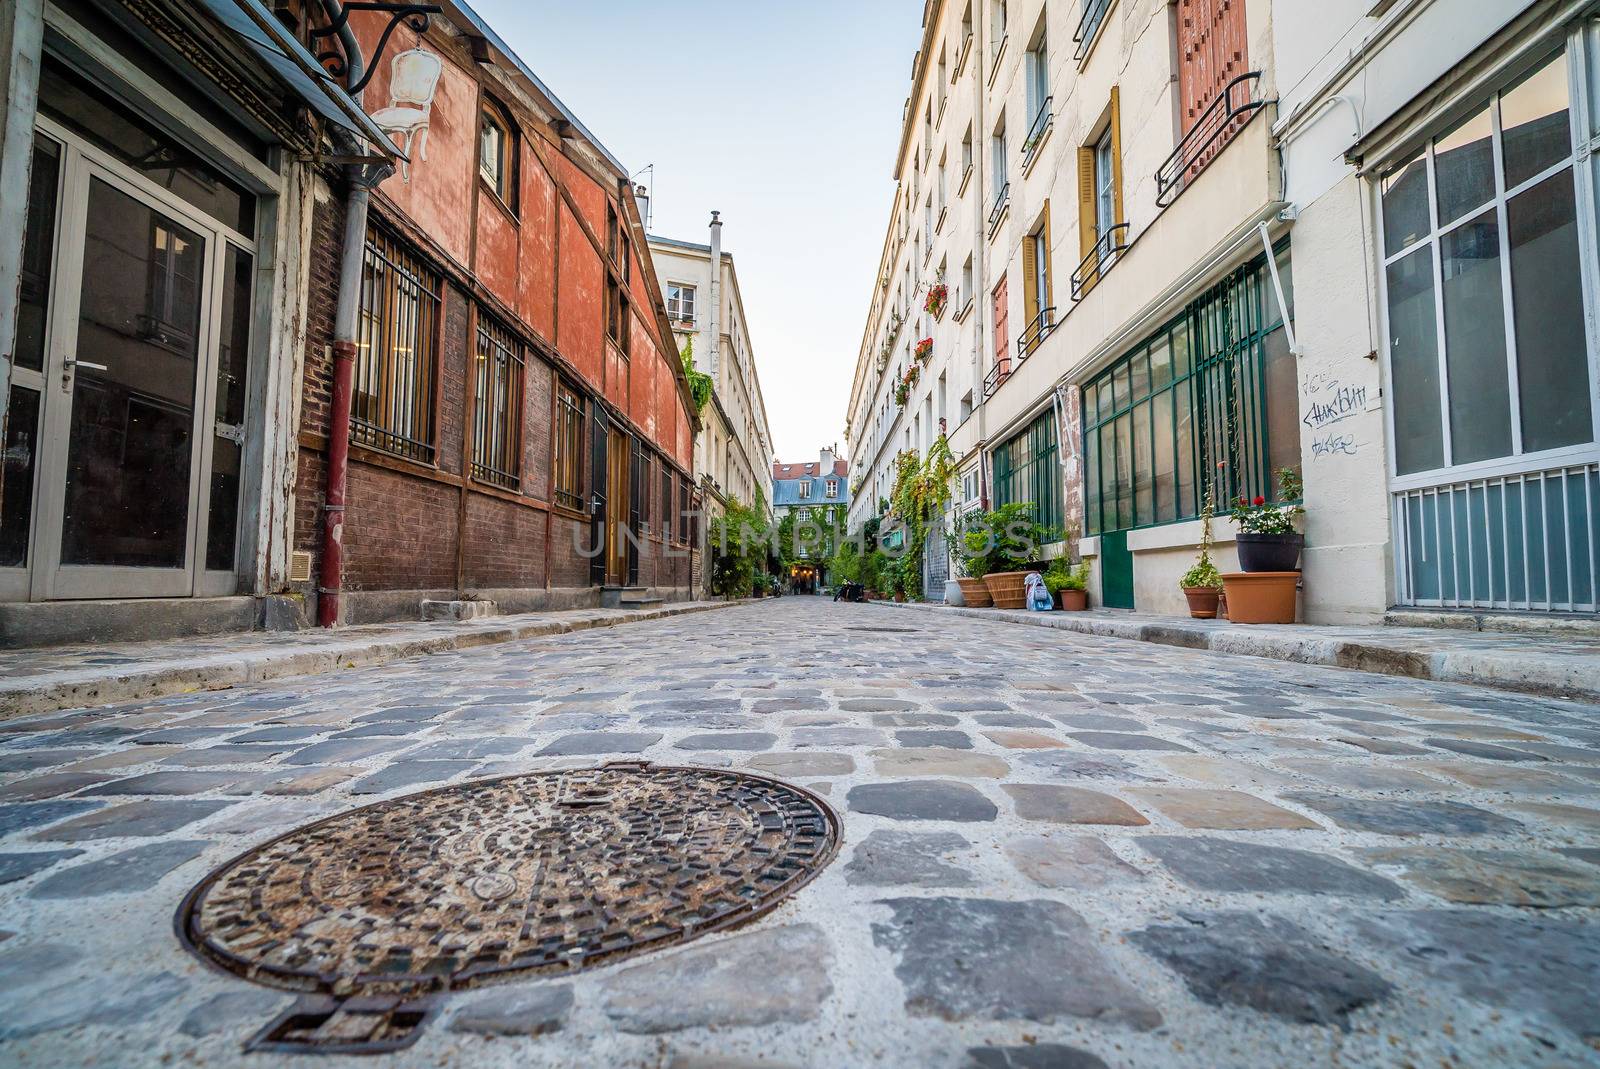 The lost secret Figuier street in Paris